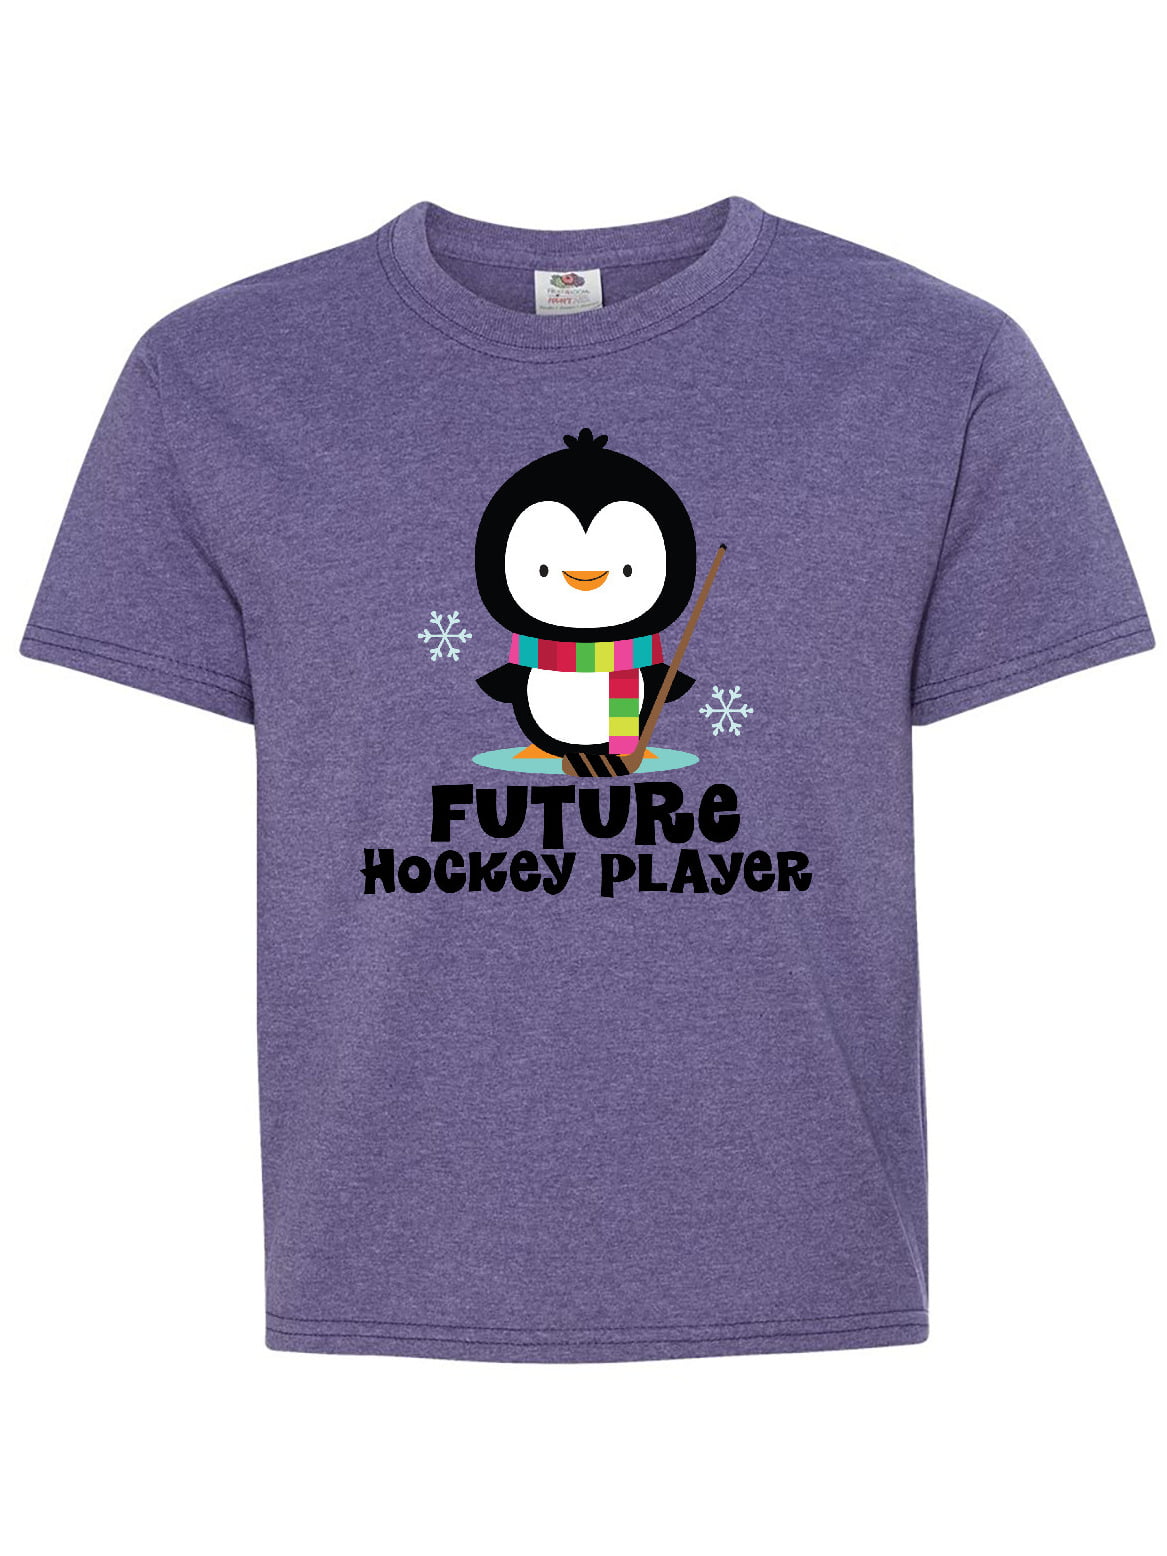 Retro Hockey Player Youth T-Shirt Kids Hockey Shirt